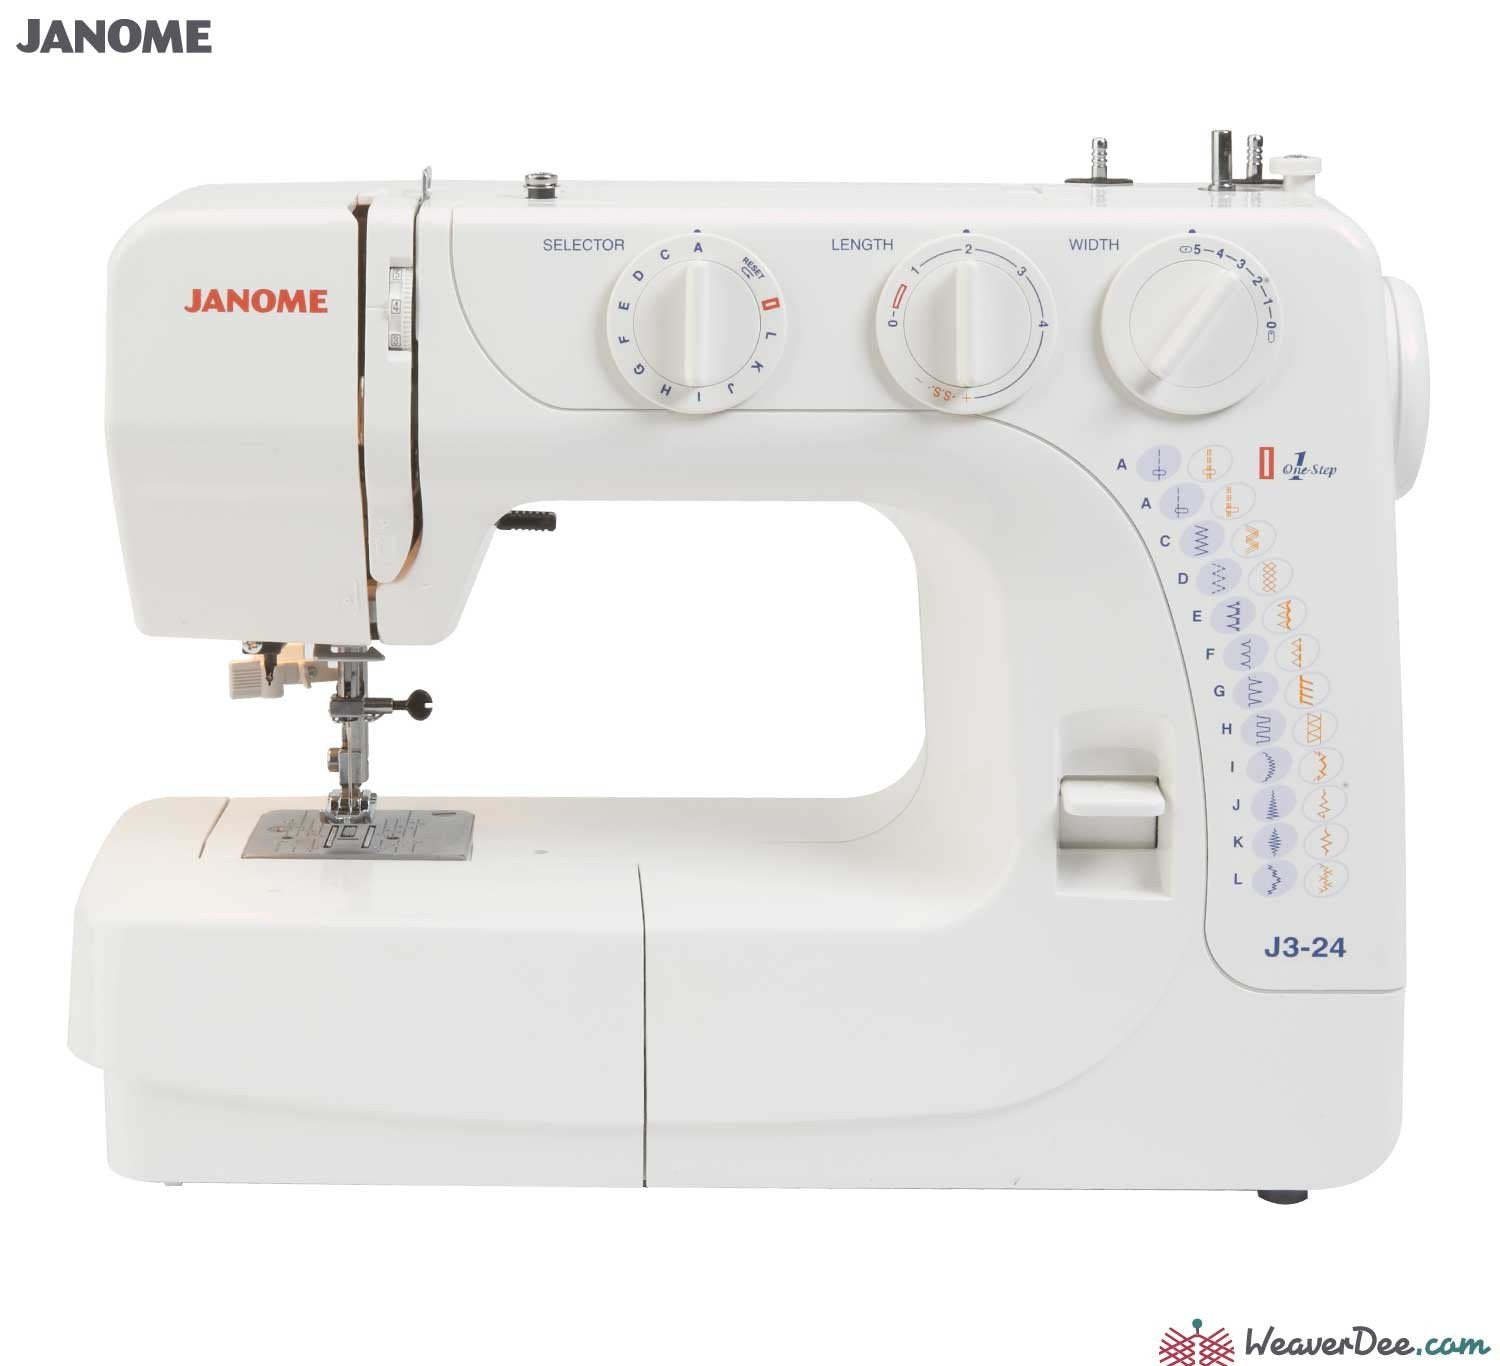  Janome Sewing Machine, White